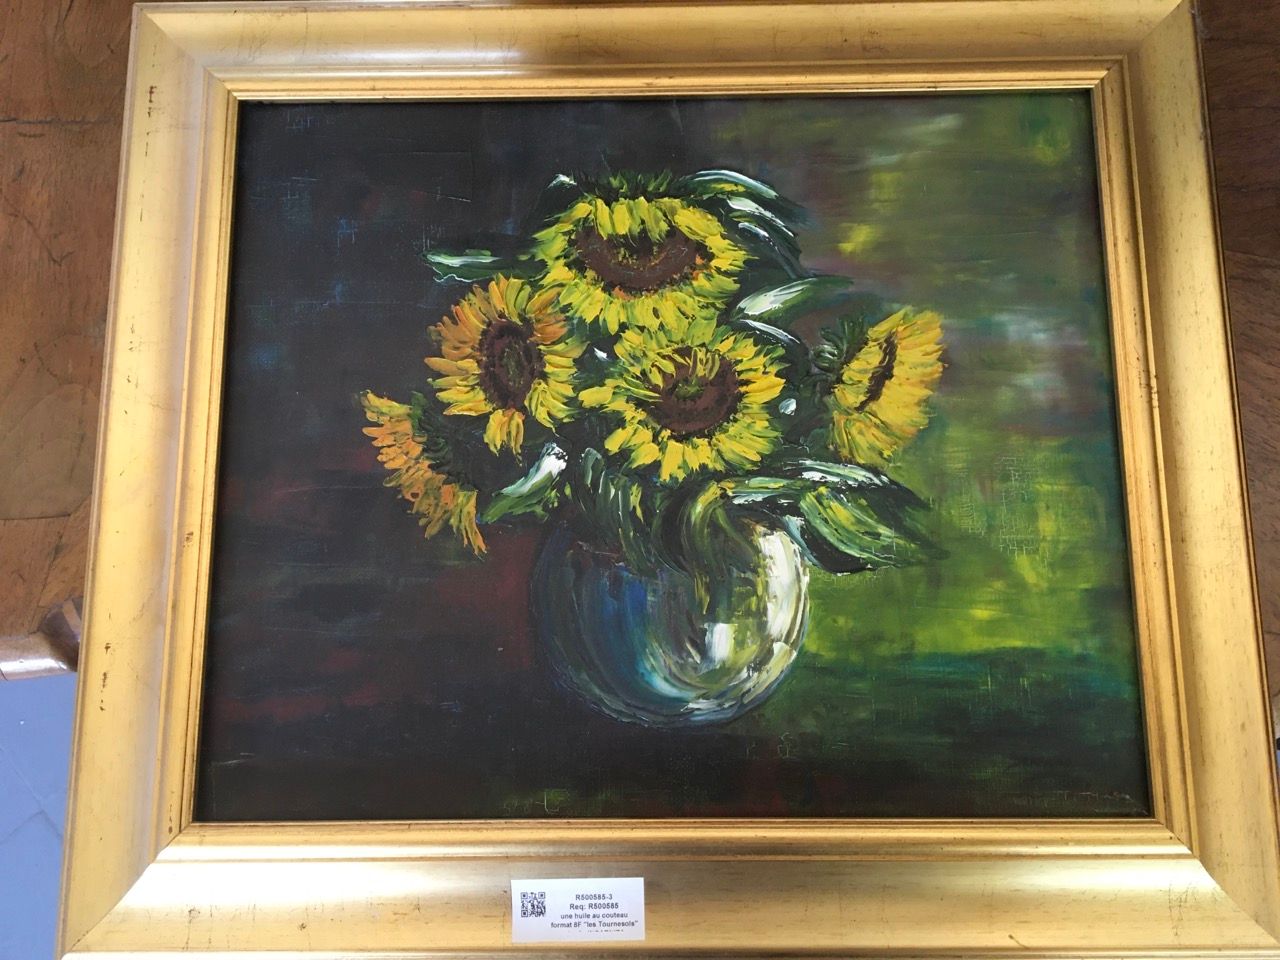 INCARNITA 签名为 "INCARNITA "的有框刀刻油画《向日葵》，规格为8F。